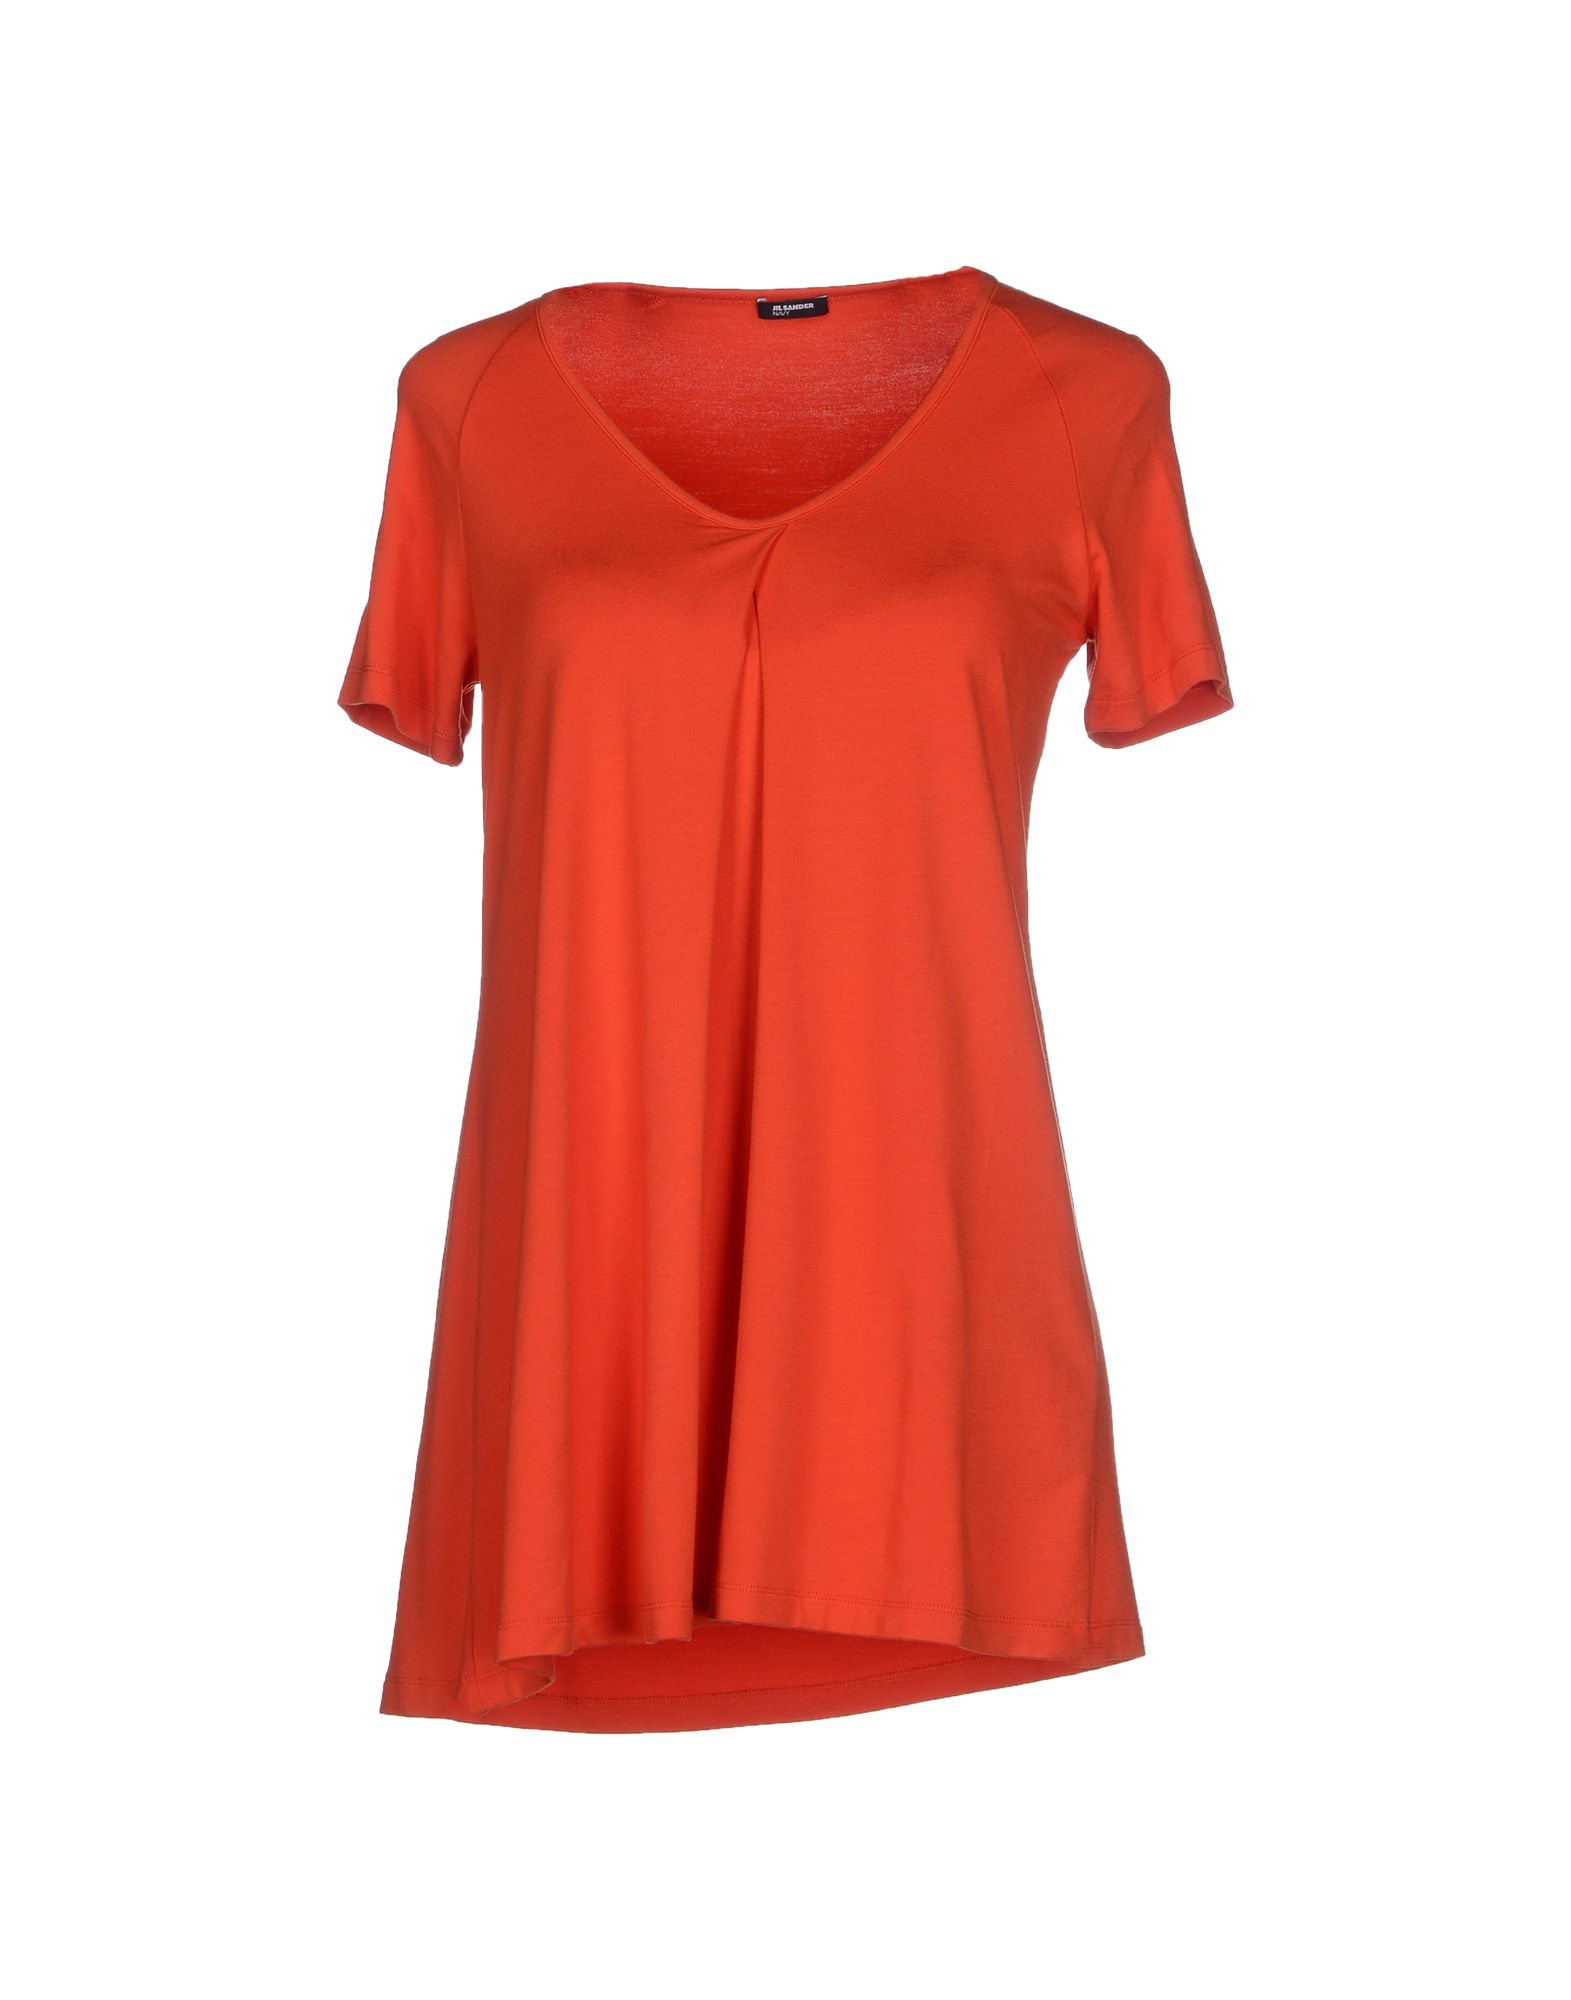 JIL SANDER NAVY T-shirt Arancione Donna e Top